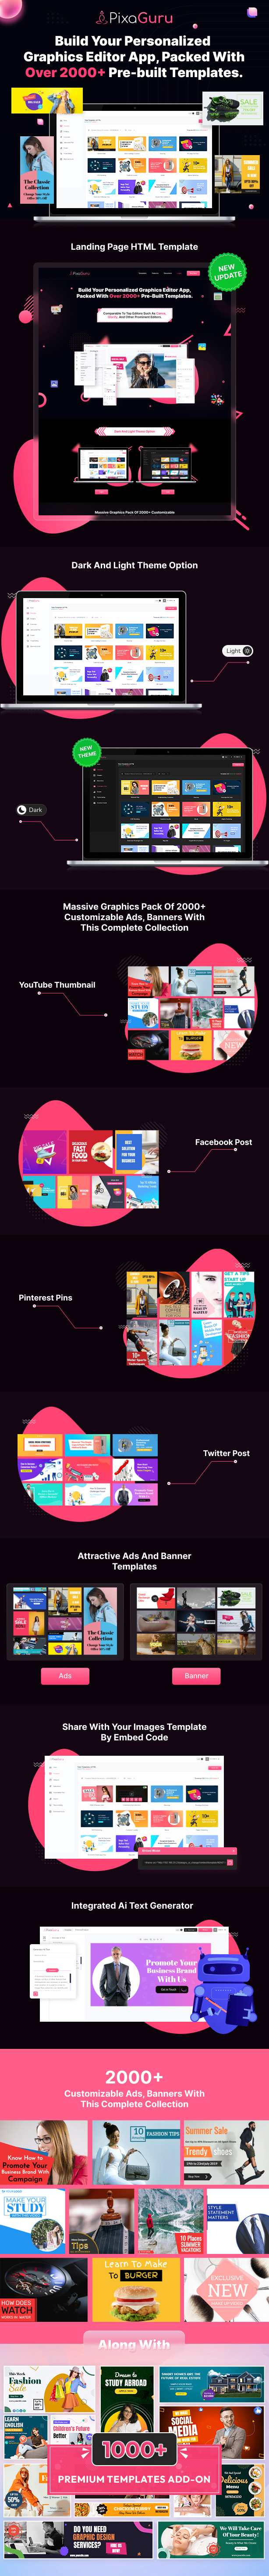 PixaGuru - SAAS Platform to Create Graphics, Images, Social Media Posts, Ads, Banners, & Stories - 3